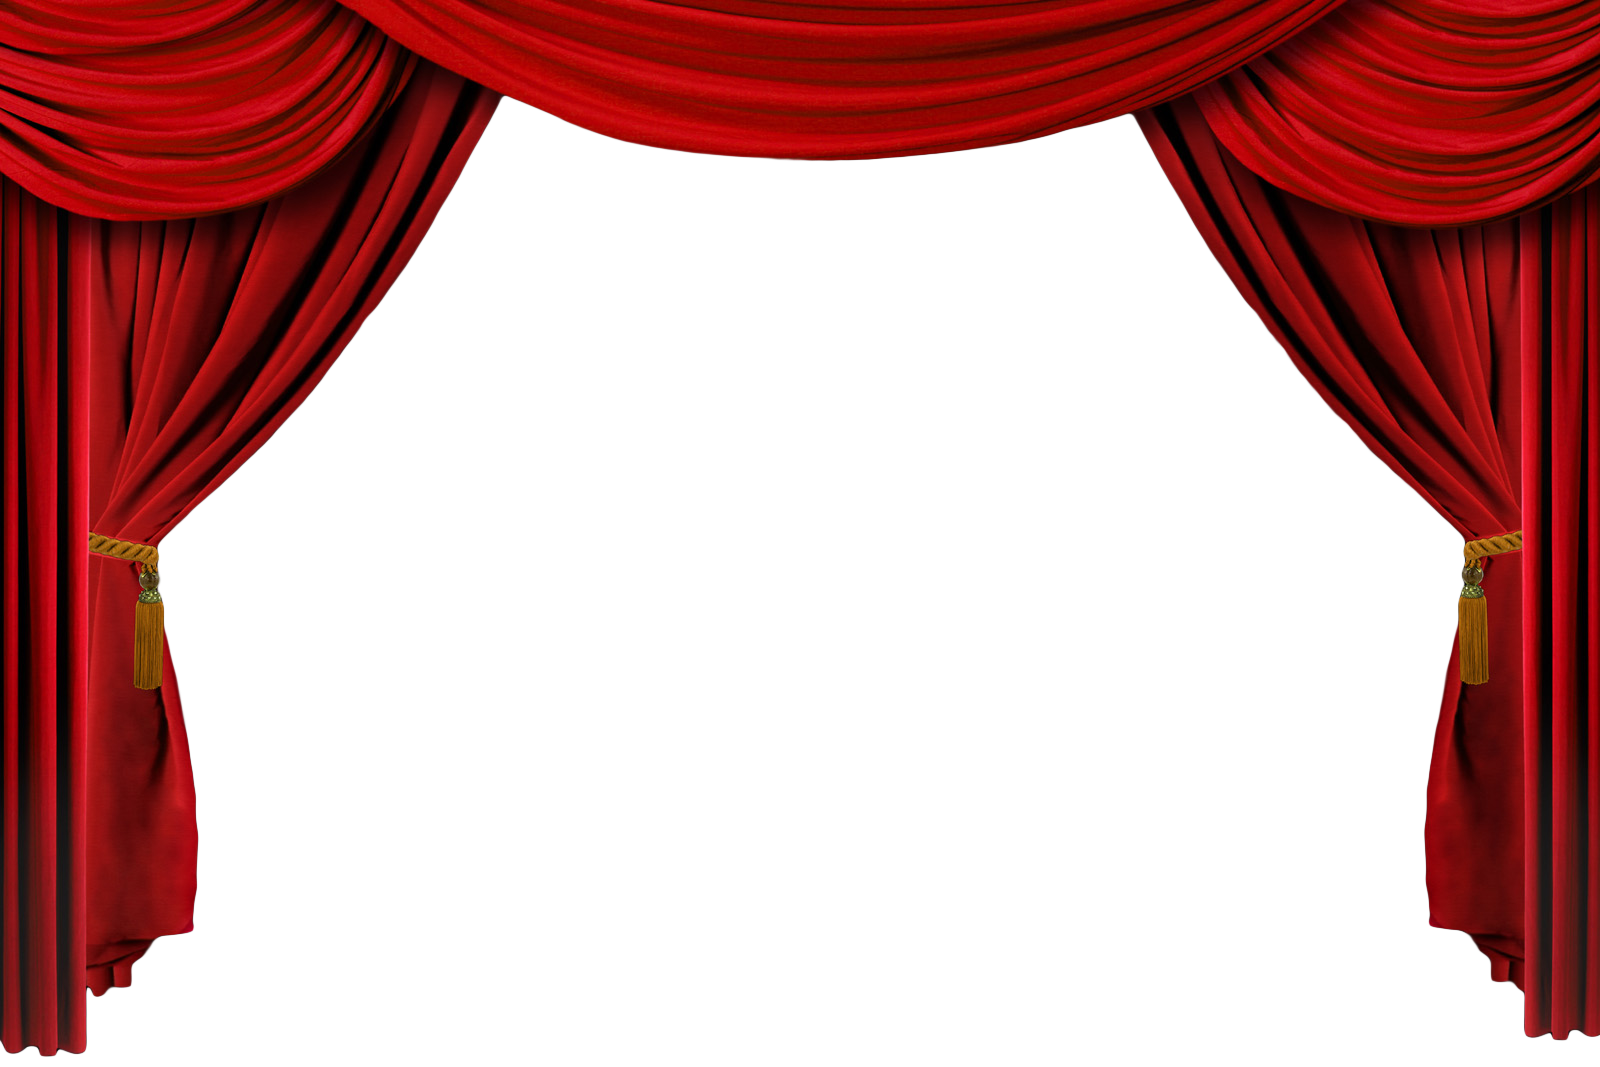 Curtains clipart red velvet, Picture #857422 curtains clipart red velvet